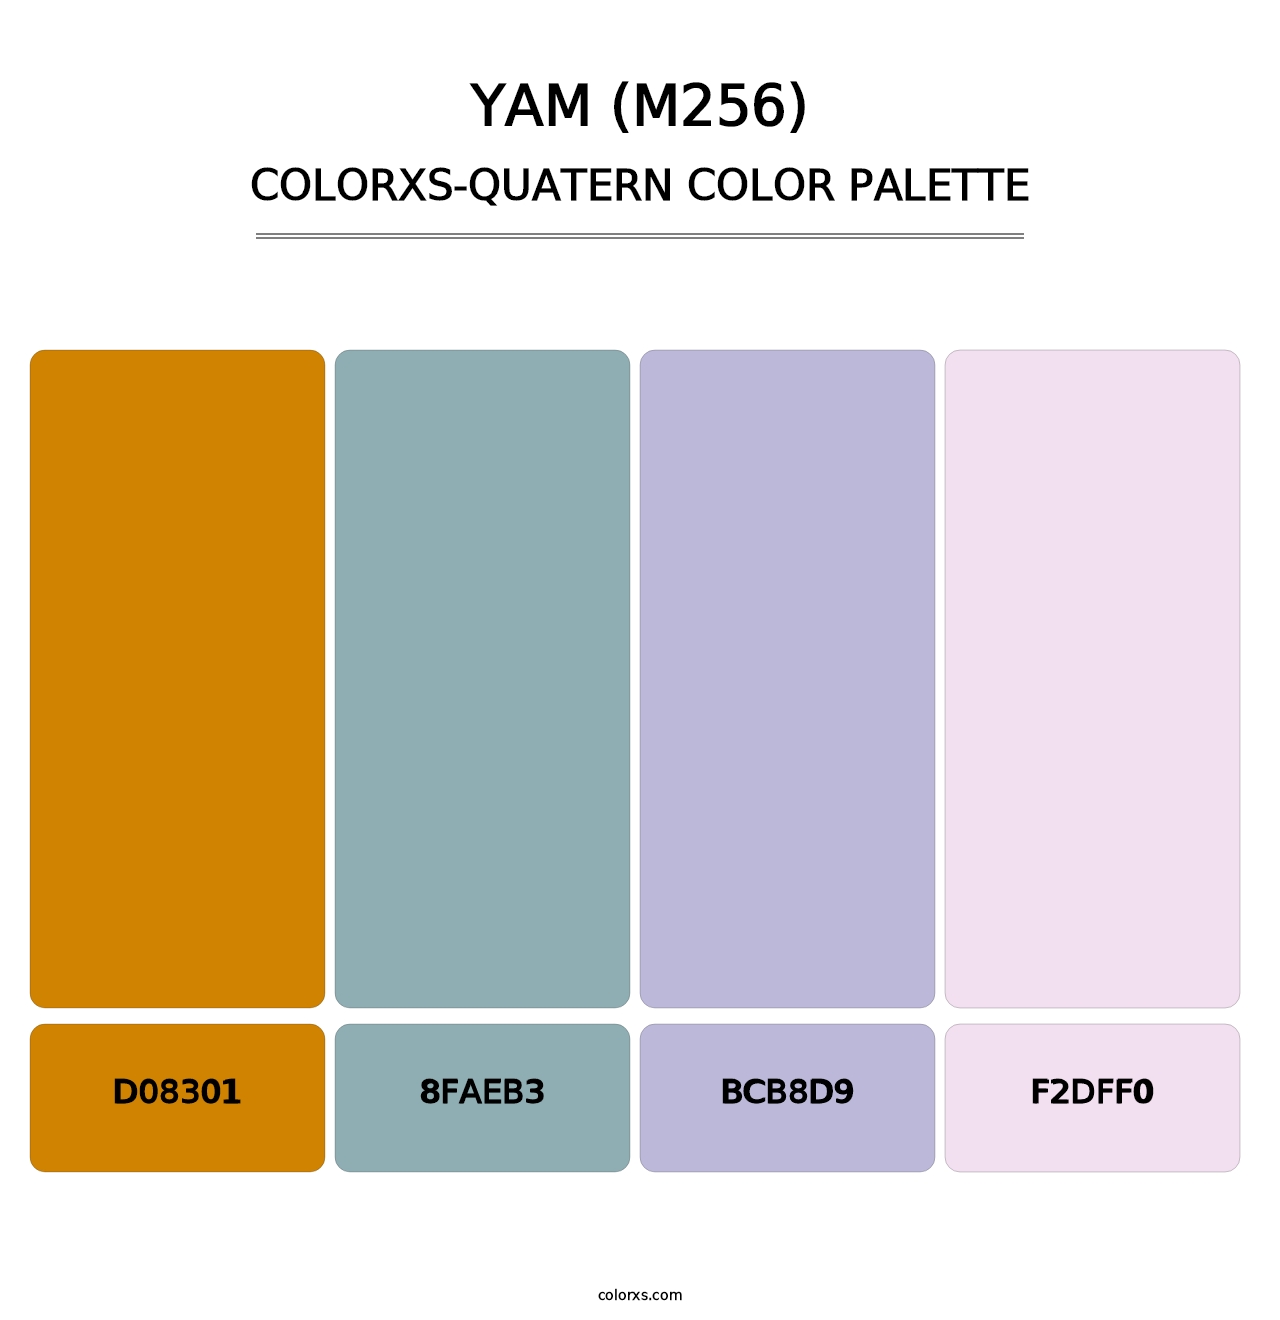 Yam (M256) - Colorxs Quatern Palette